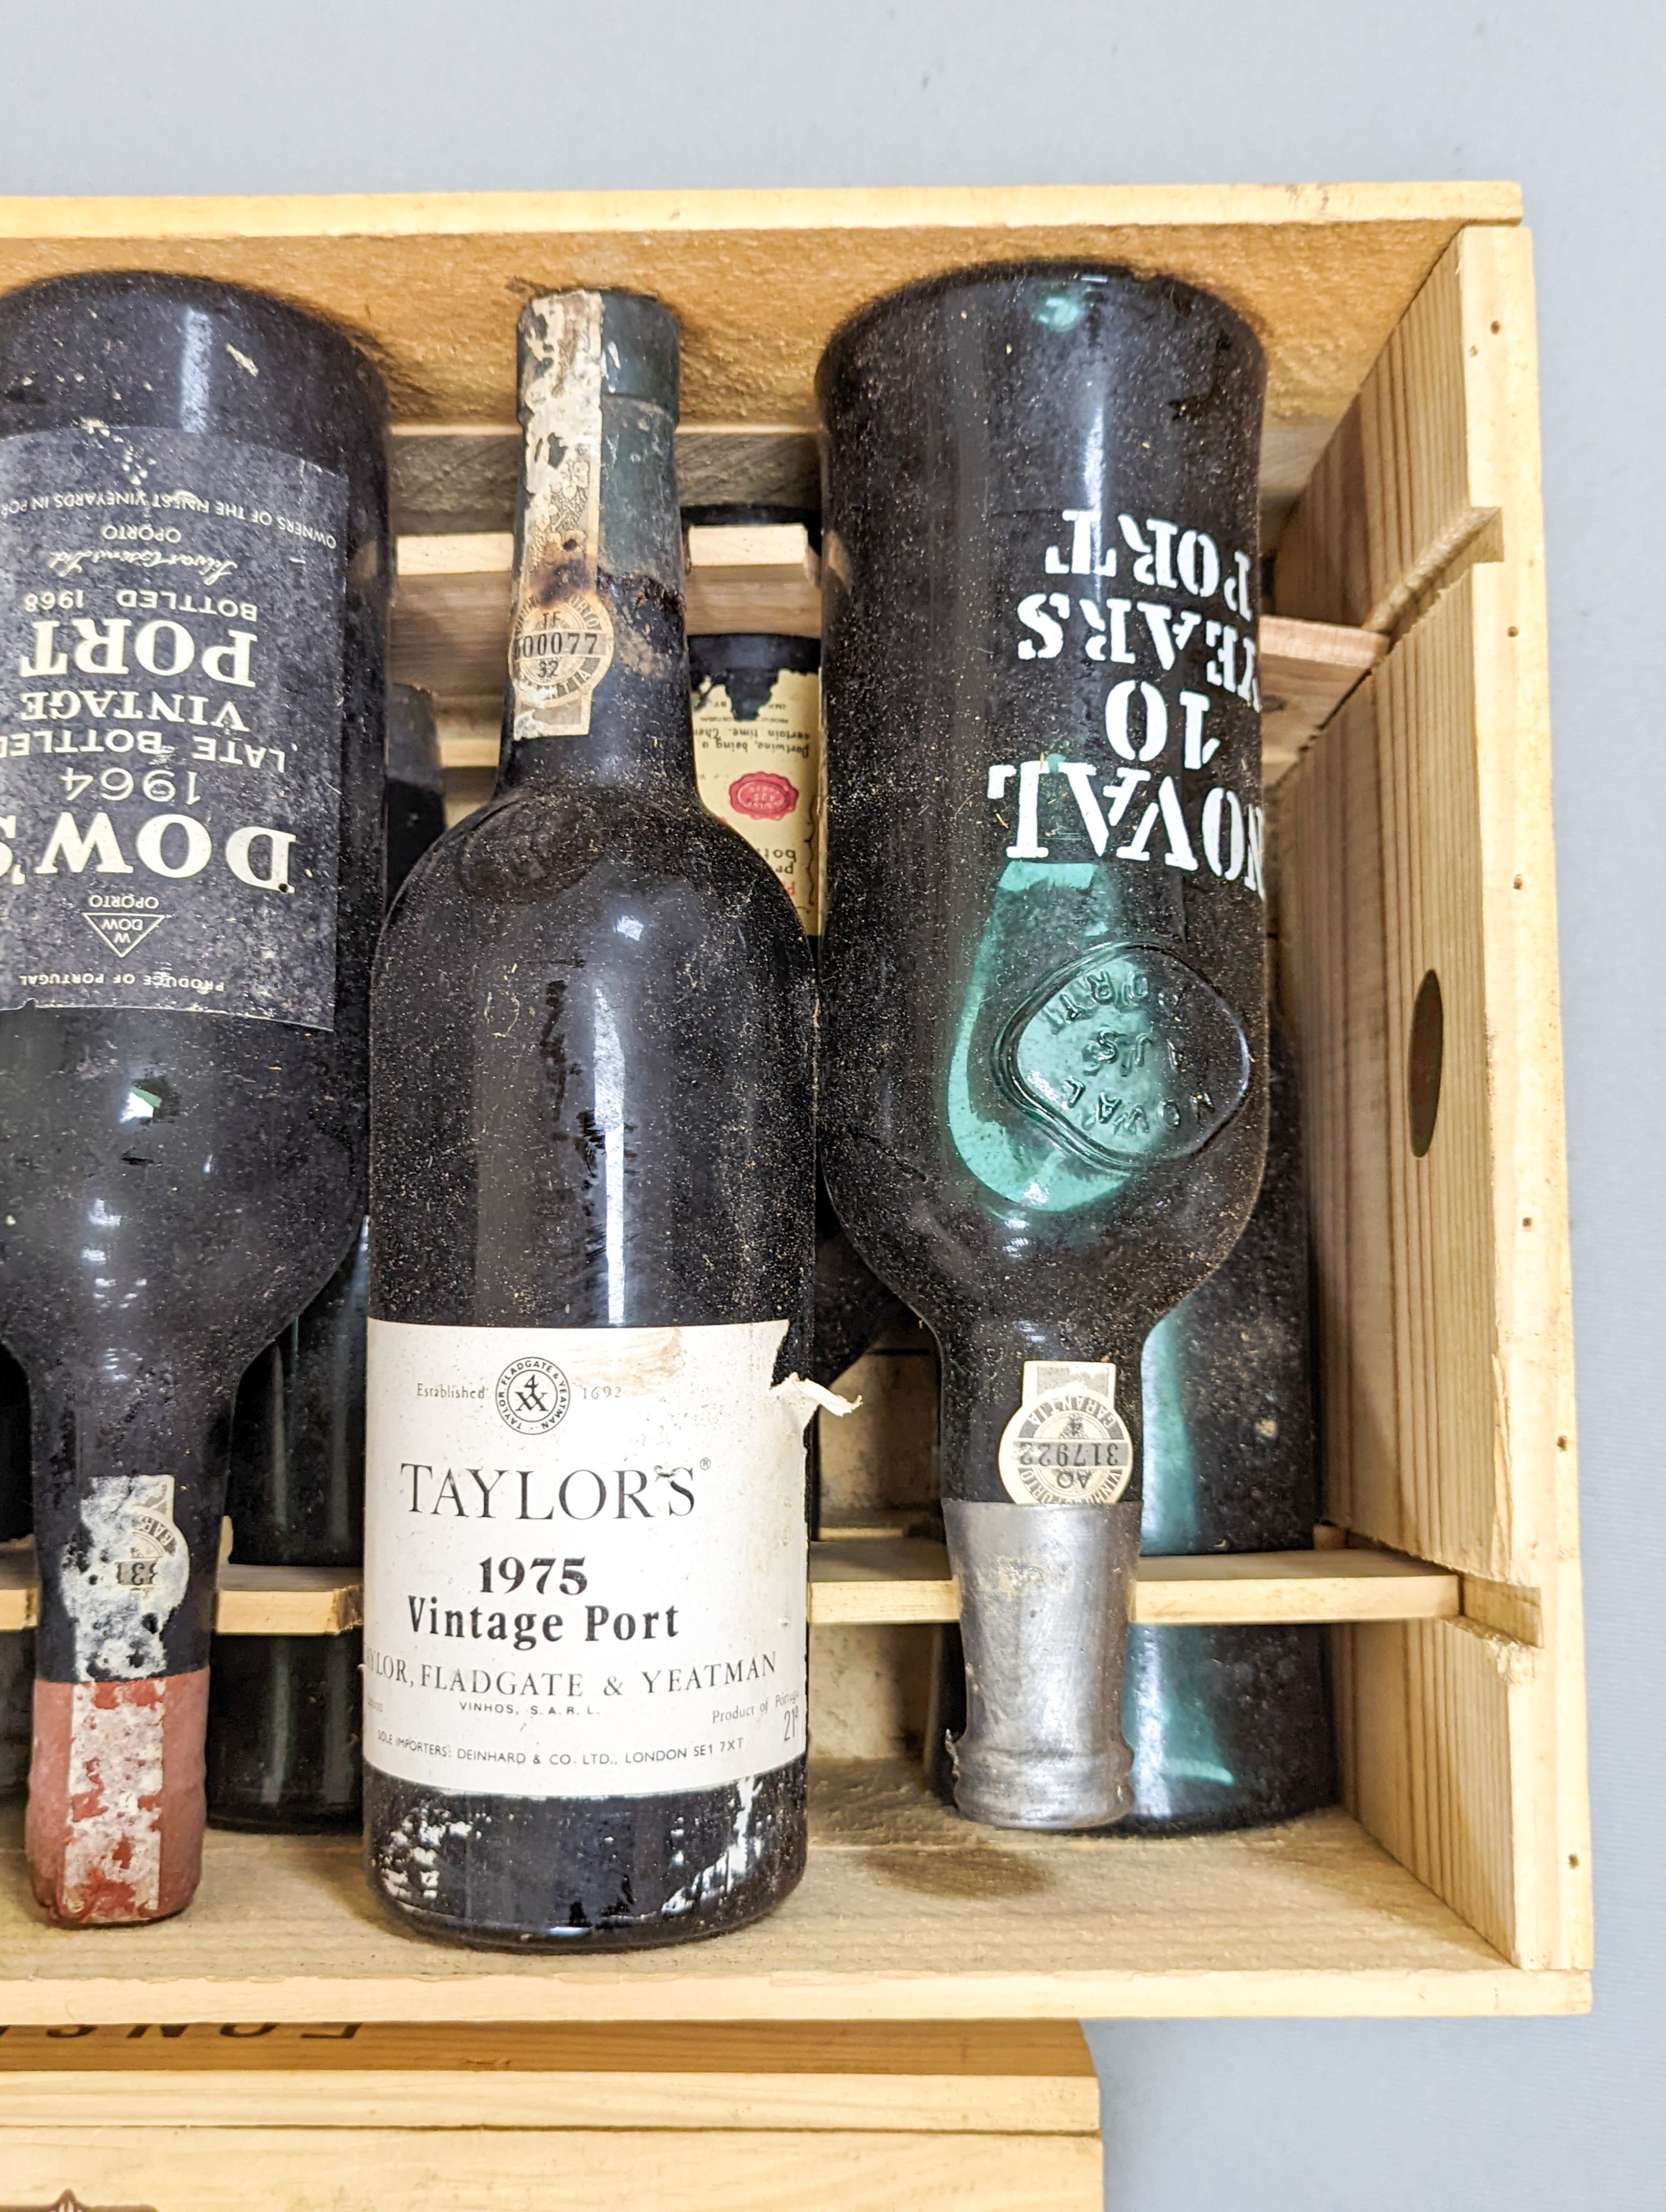 13 various bottles of port including Taylor’s 1975 vintage, Dow’s 1964, Noval etc.